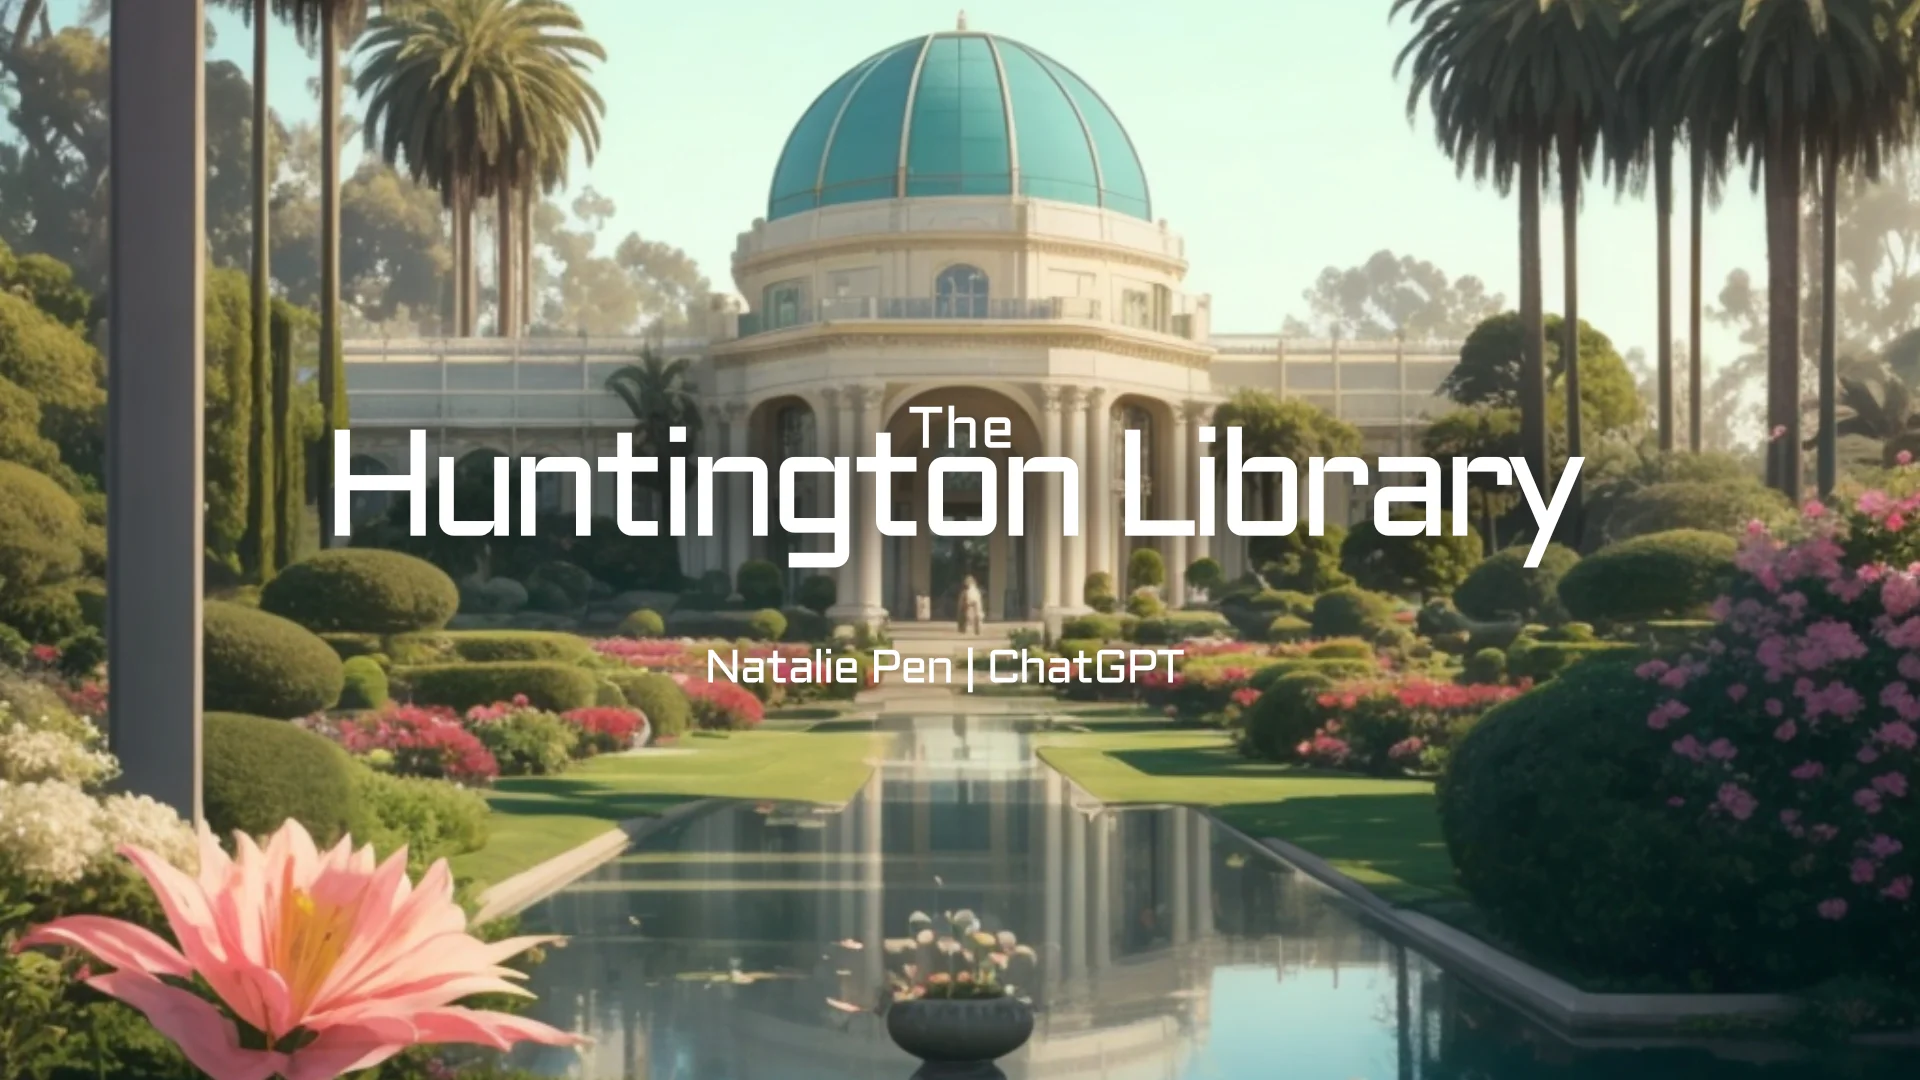 The Huntington Library